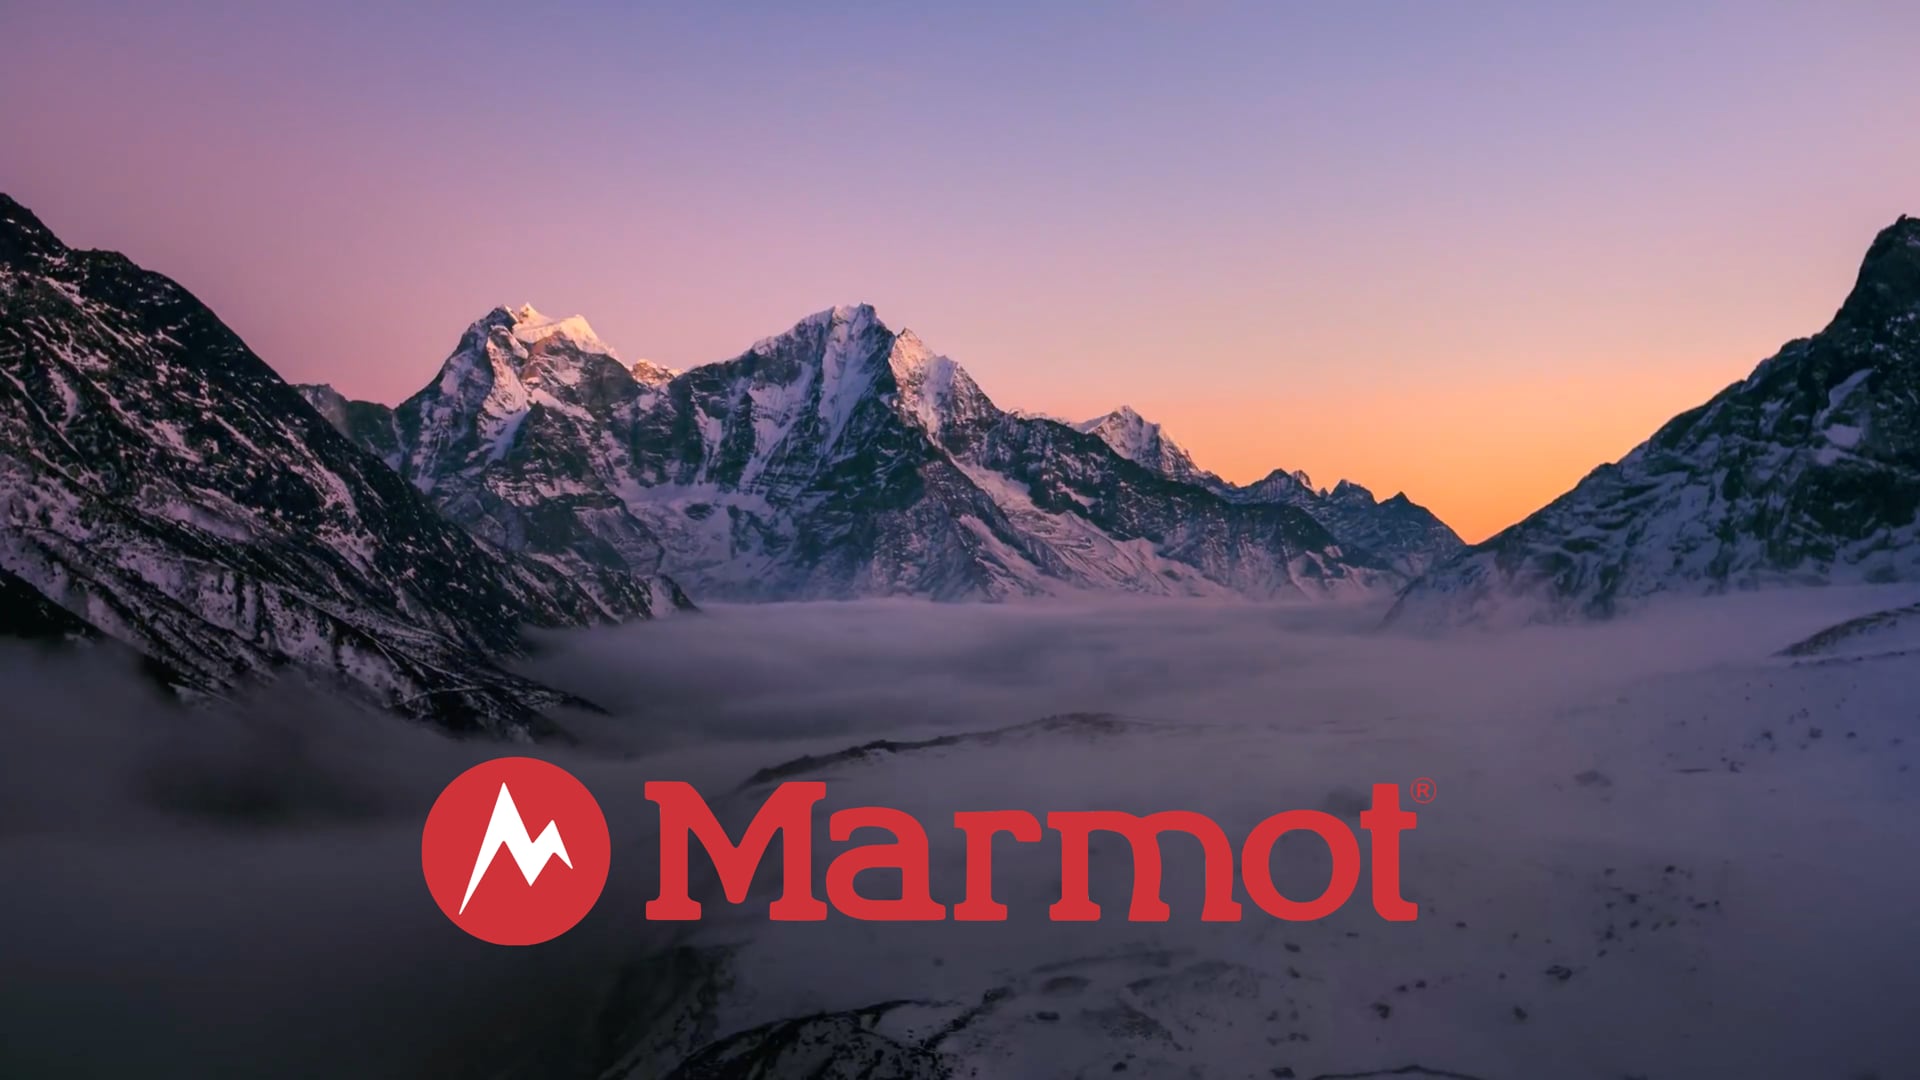 Marmot - "Stoke Your Fire"